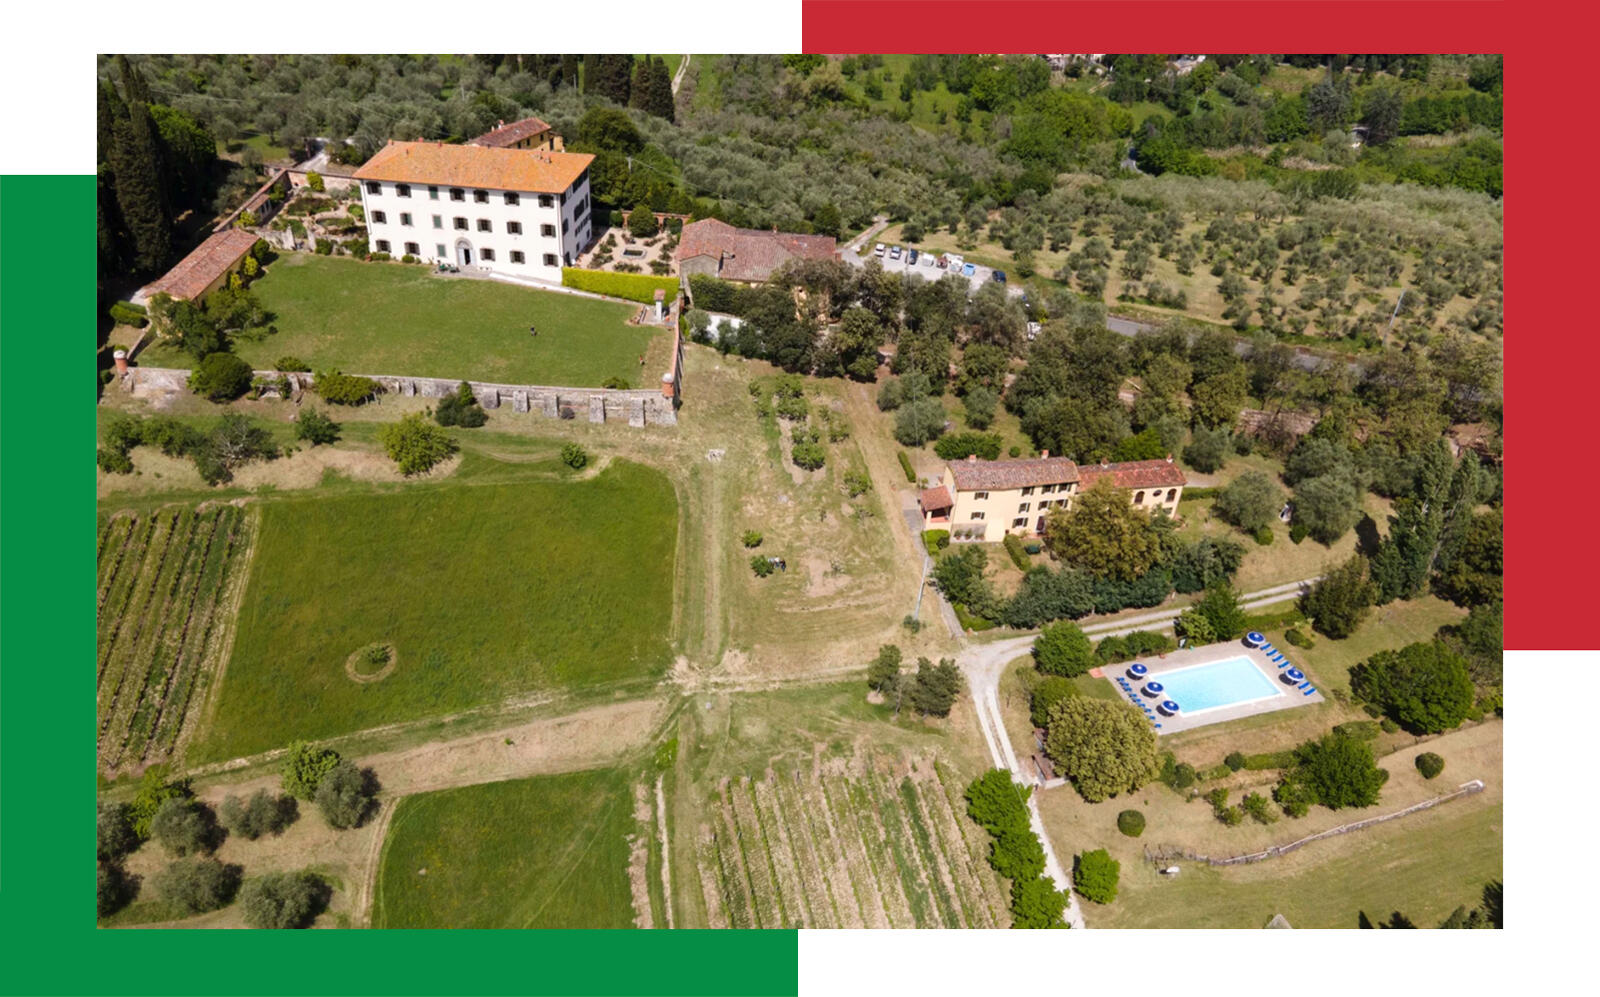 Villa Guardatoia and Casa Natalino (Concierge Auctions)